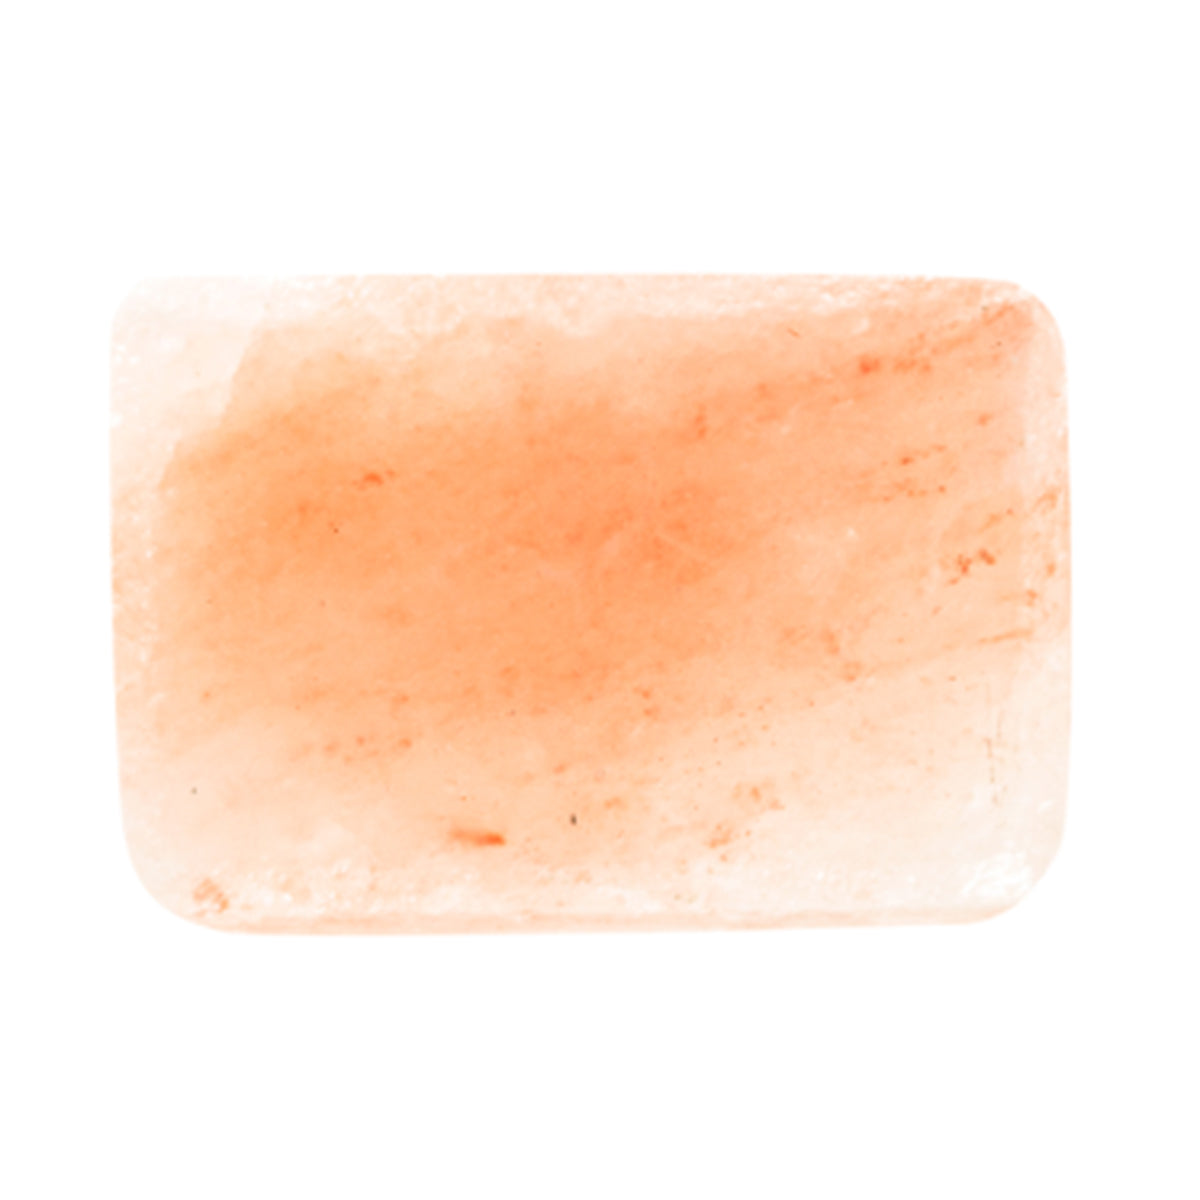 A himalayan salt stone soap shape